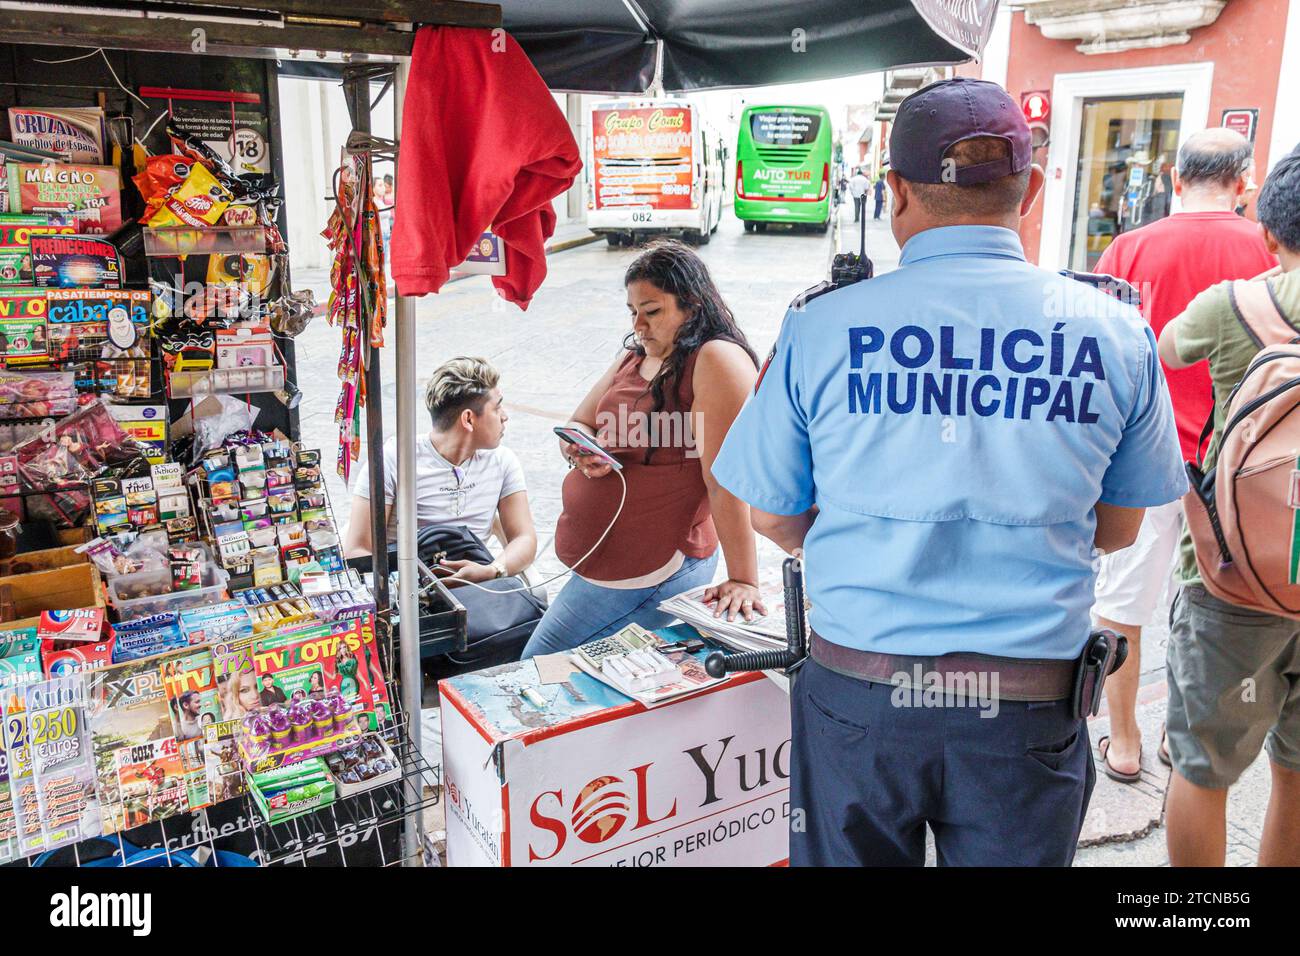 Merida Mexico,centro historico central historic district,municipal city police policeman,newsstand sidewalk vendor,man men male,woman women lady femal Stock Photo